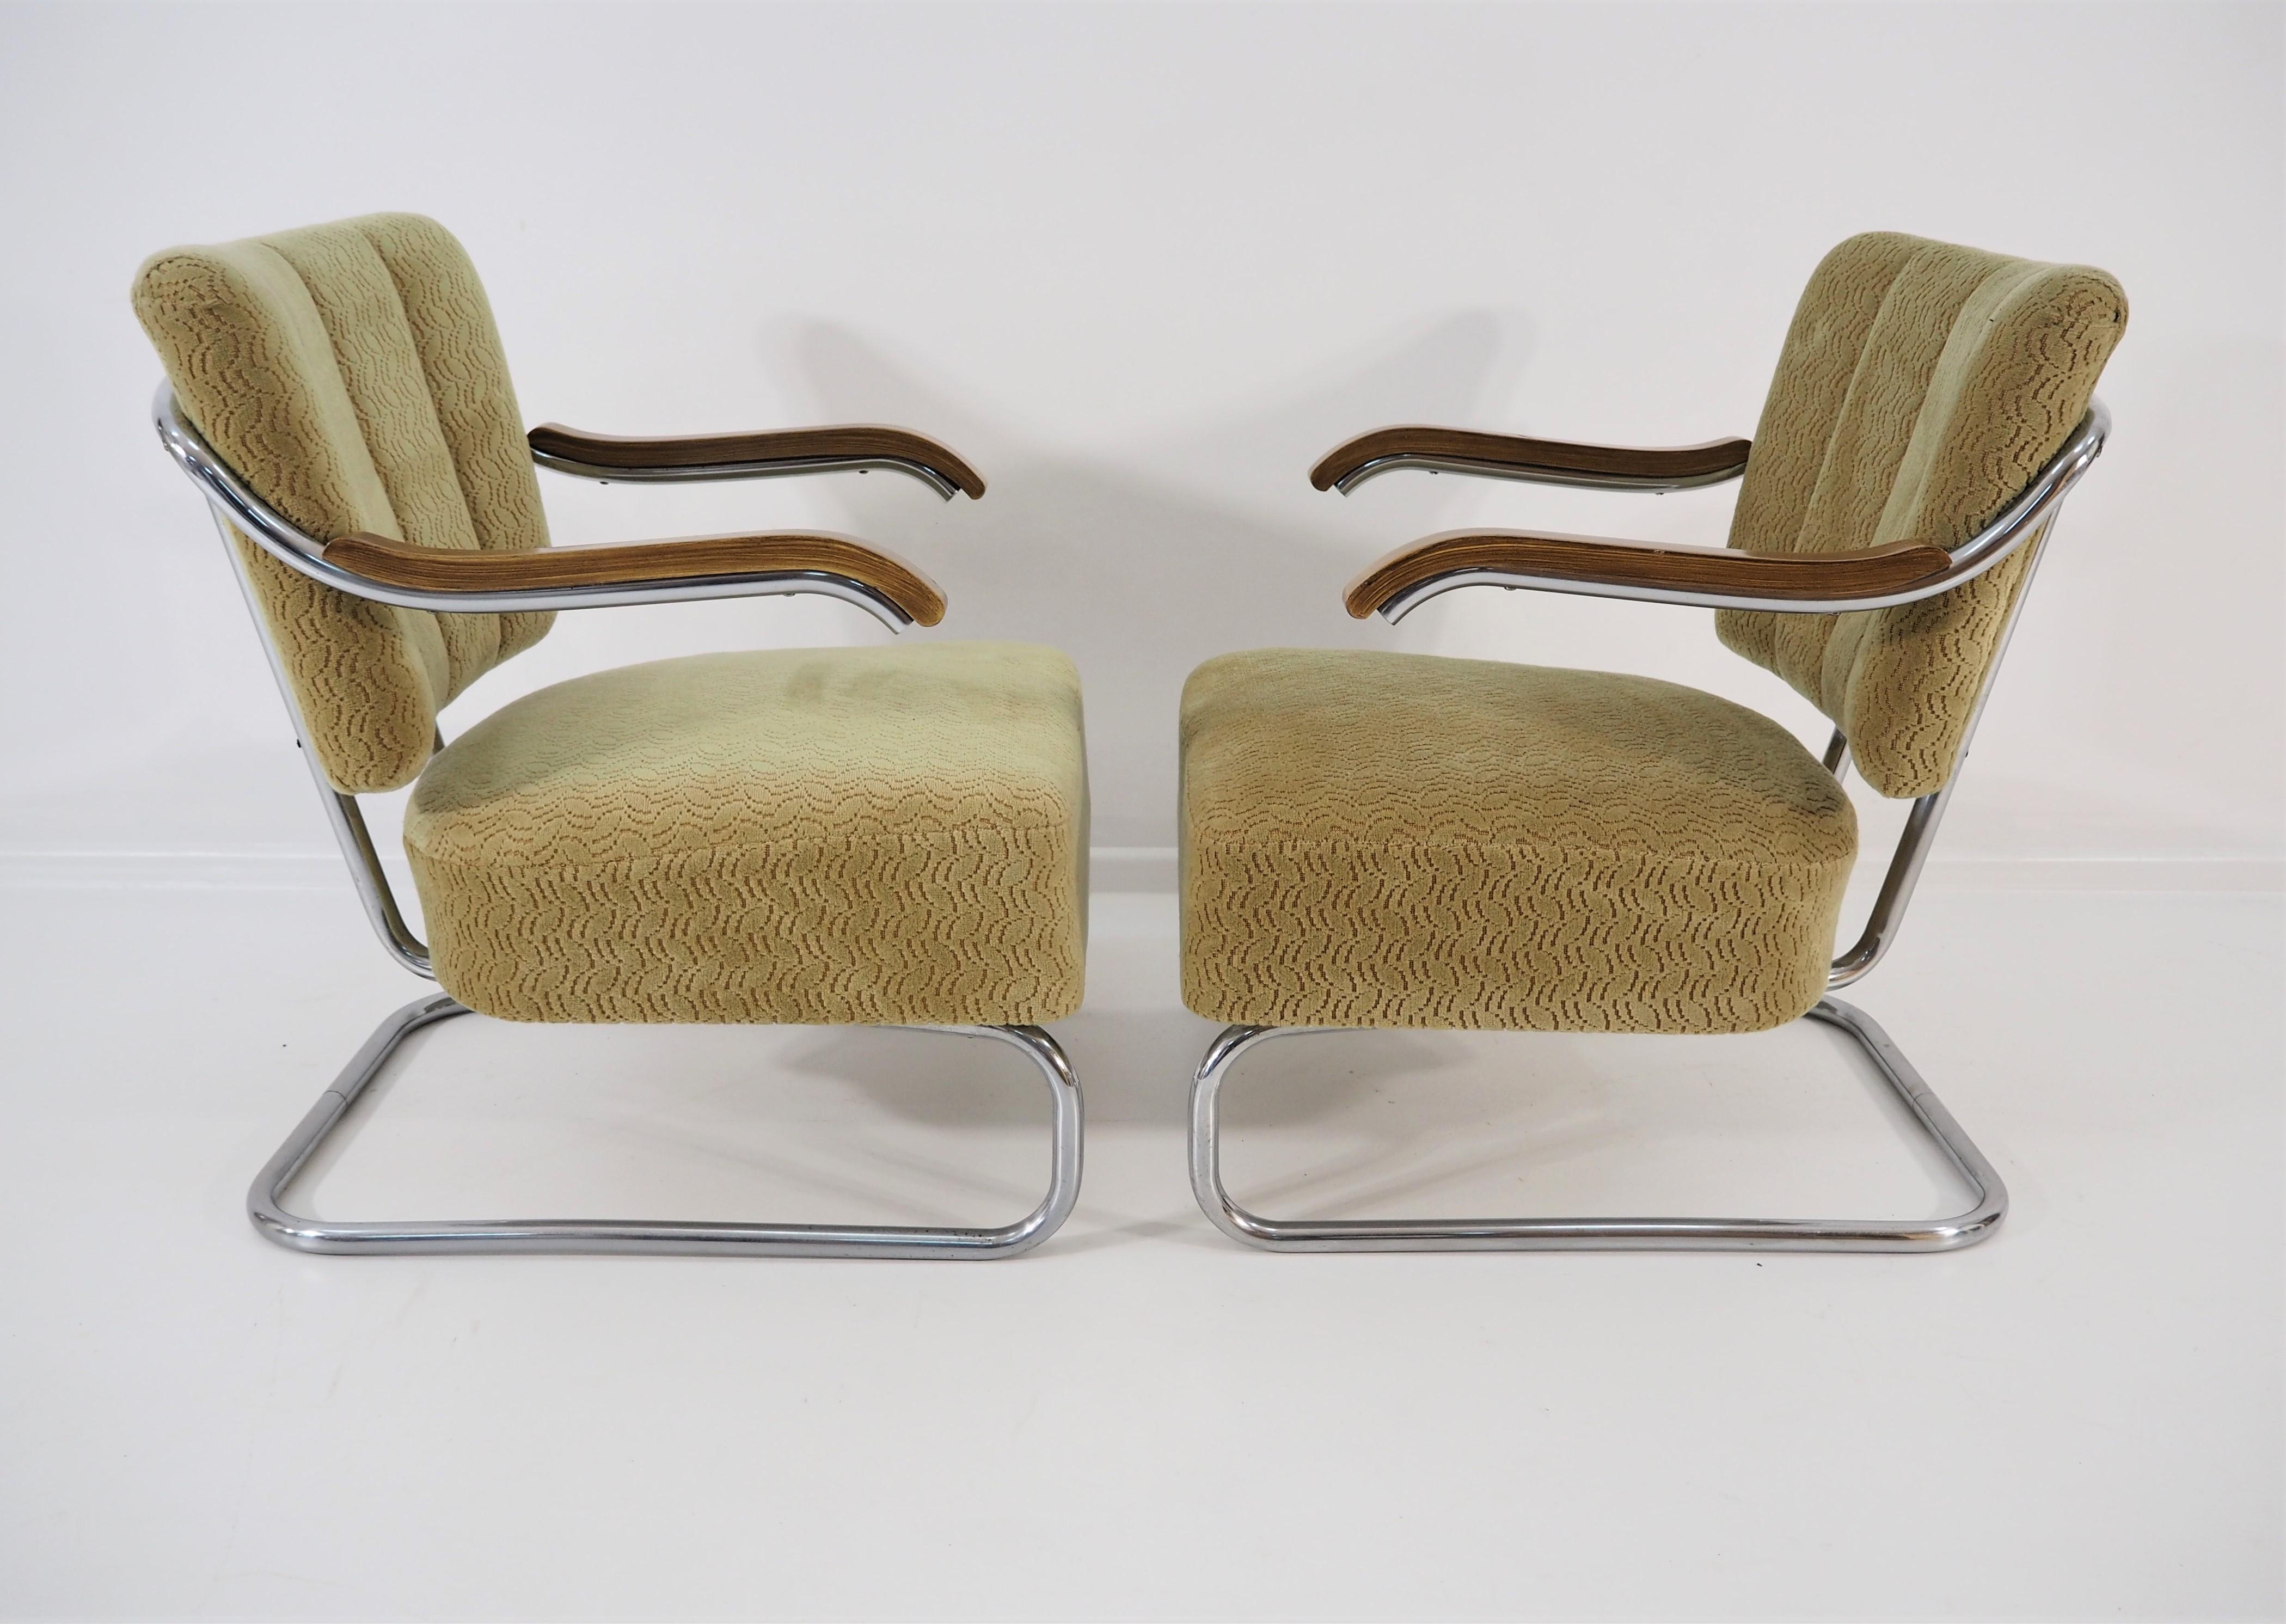 Chrom Bauhaus armchairs Robert Slezak for Hynek Gottwald of the 1930s. Original condition.